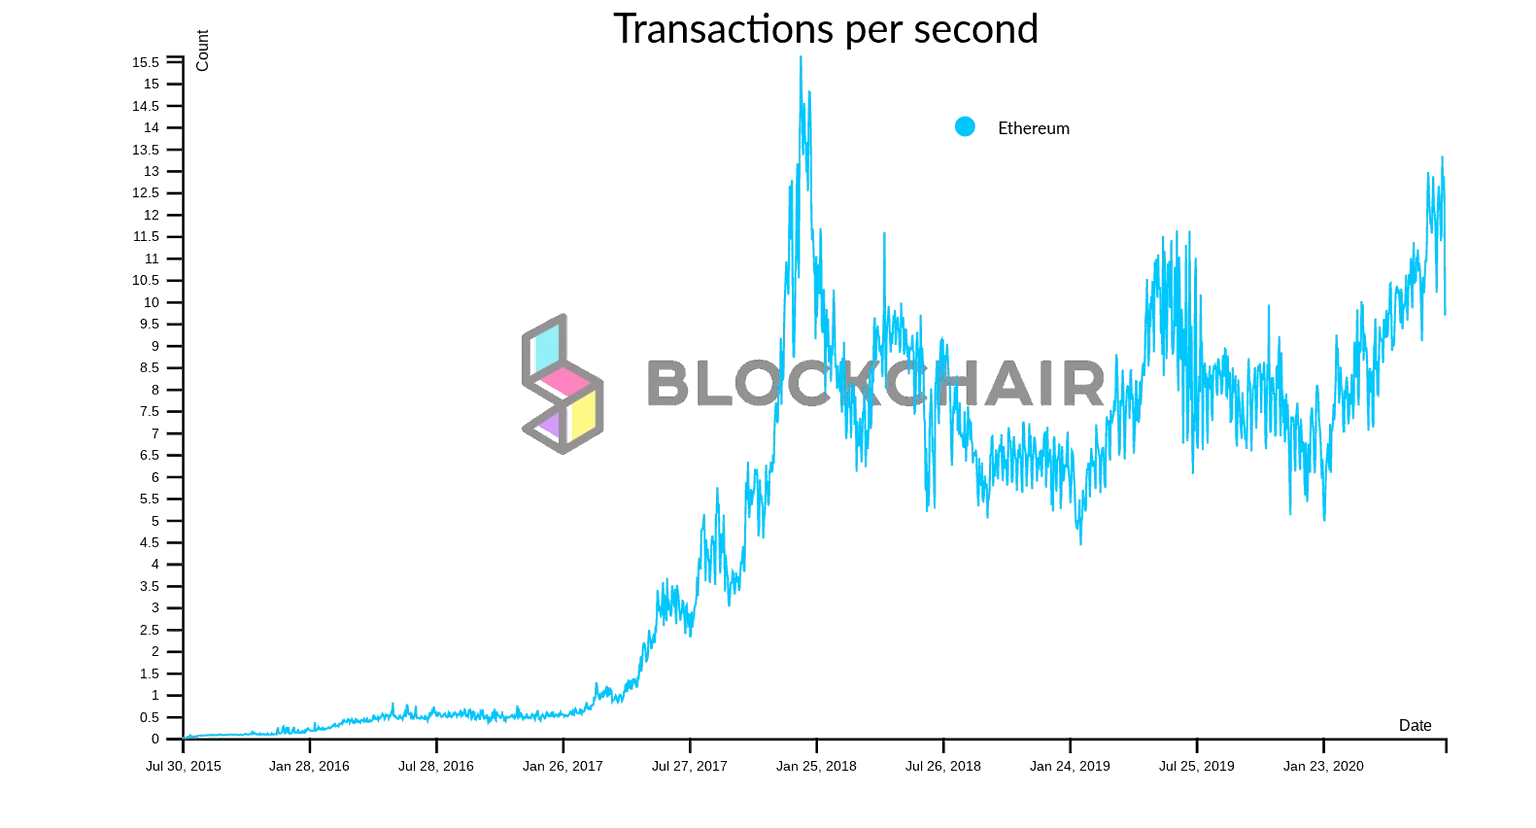 Ethereum transactions per second. Source: Blockchair